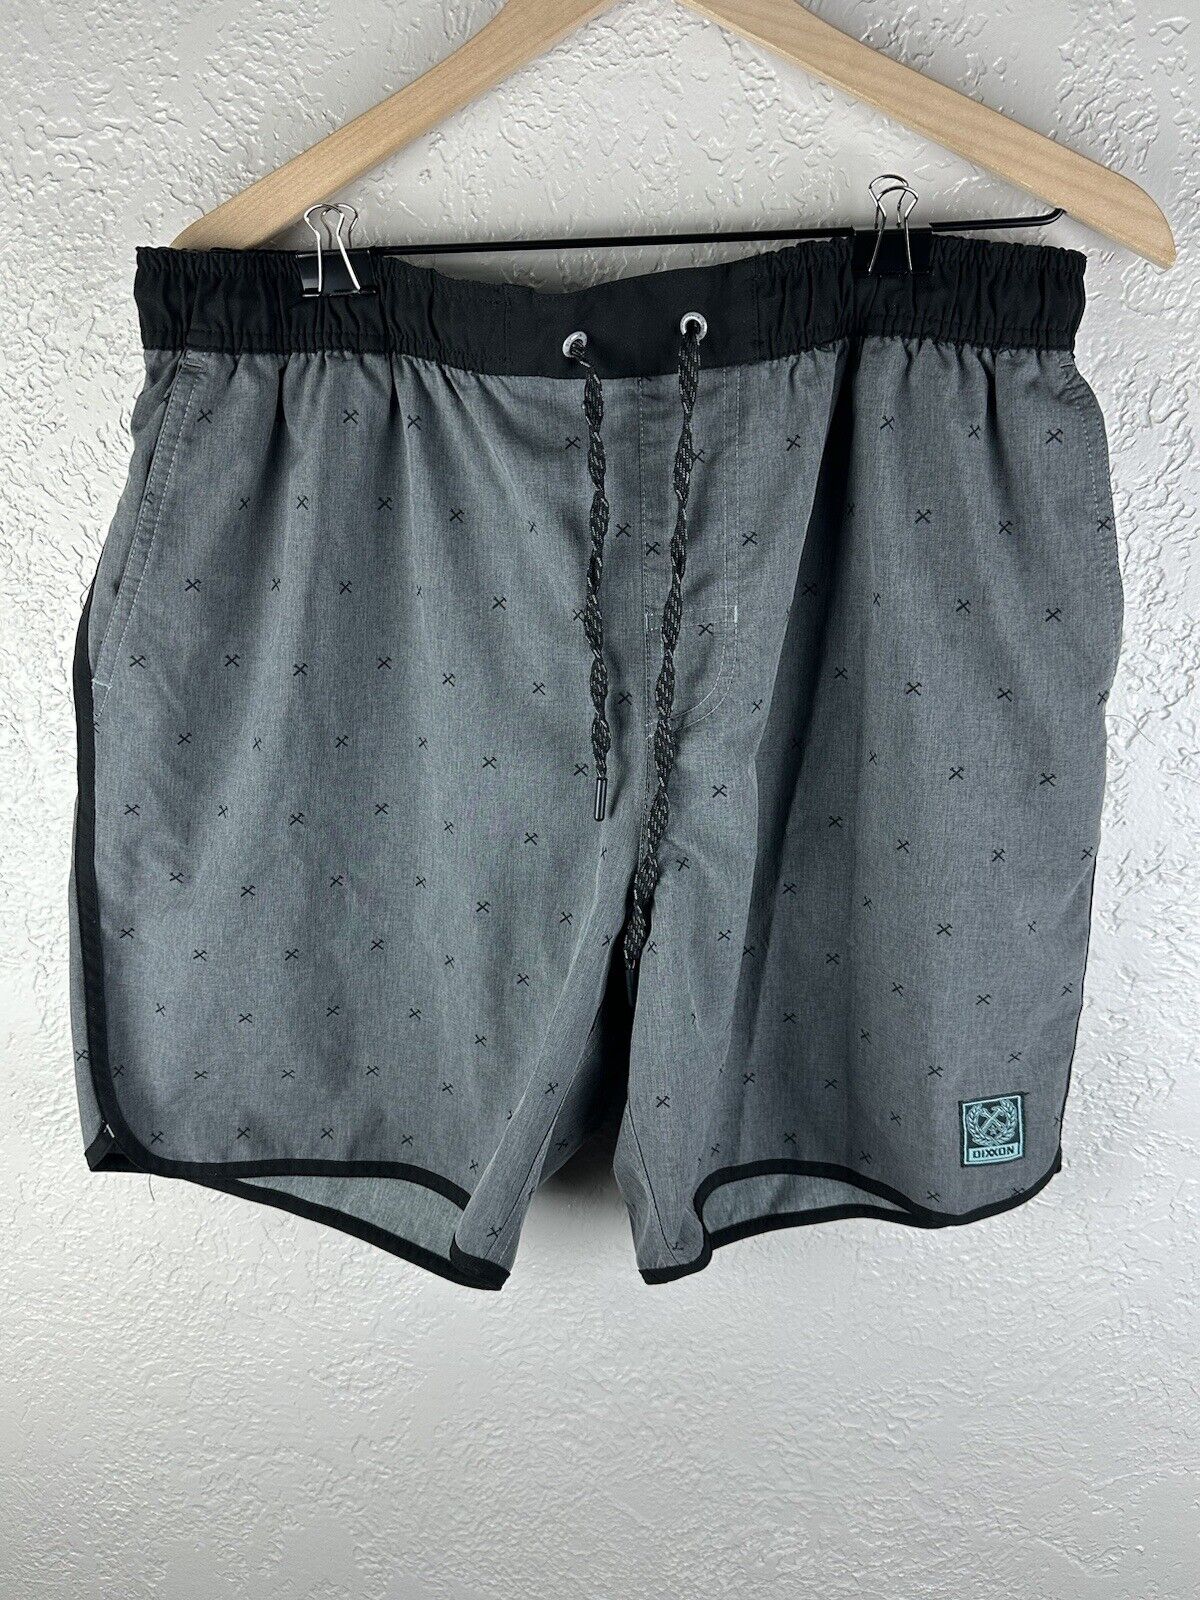 Dixxon Board Shorts Mens XL Gray Swim Trunks Unli… - image 1